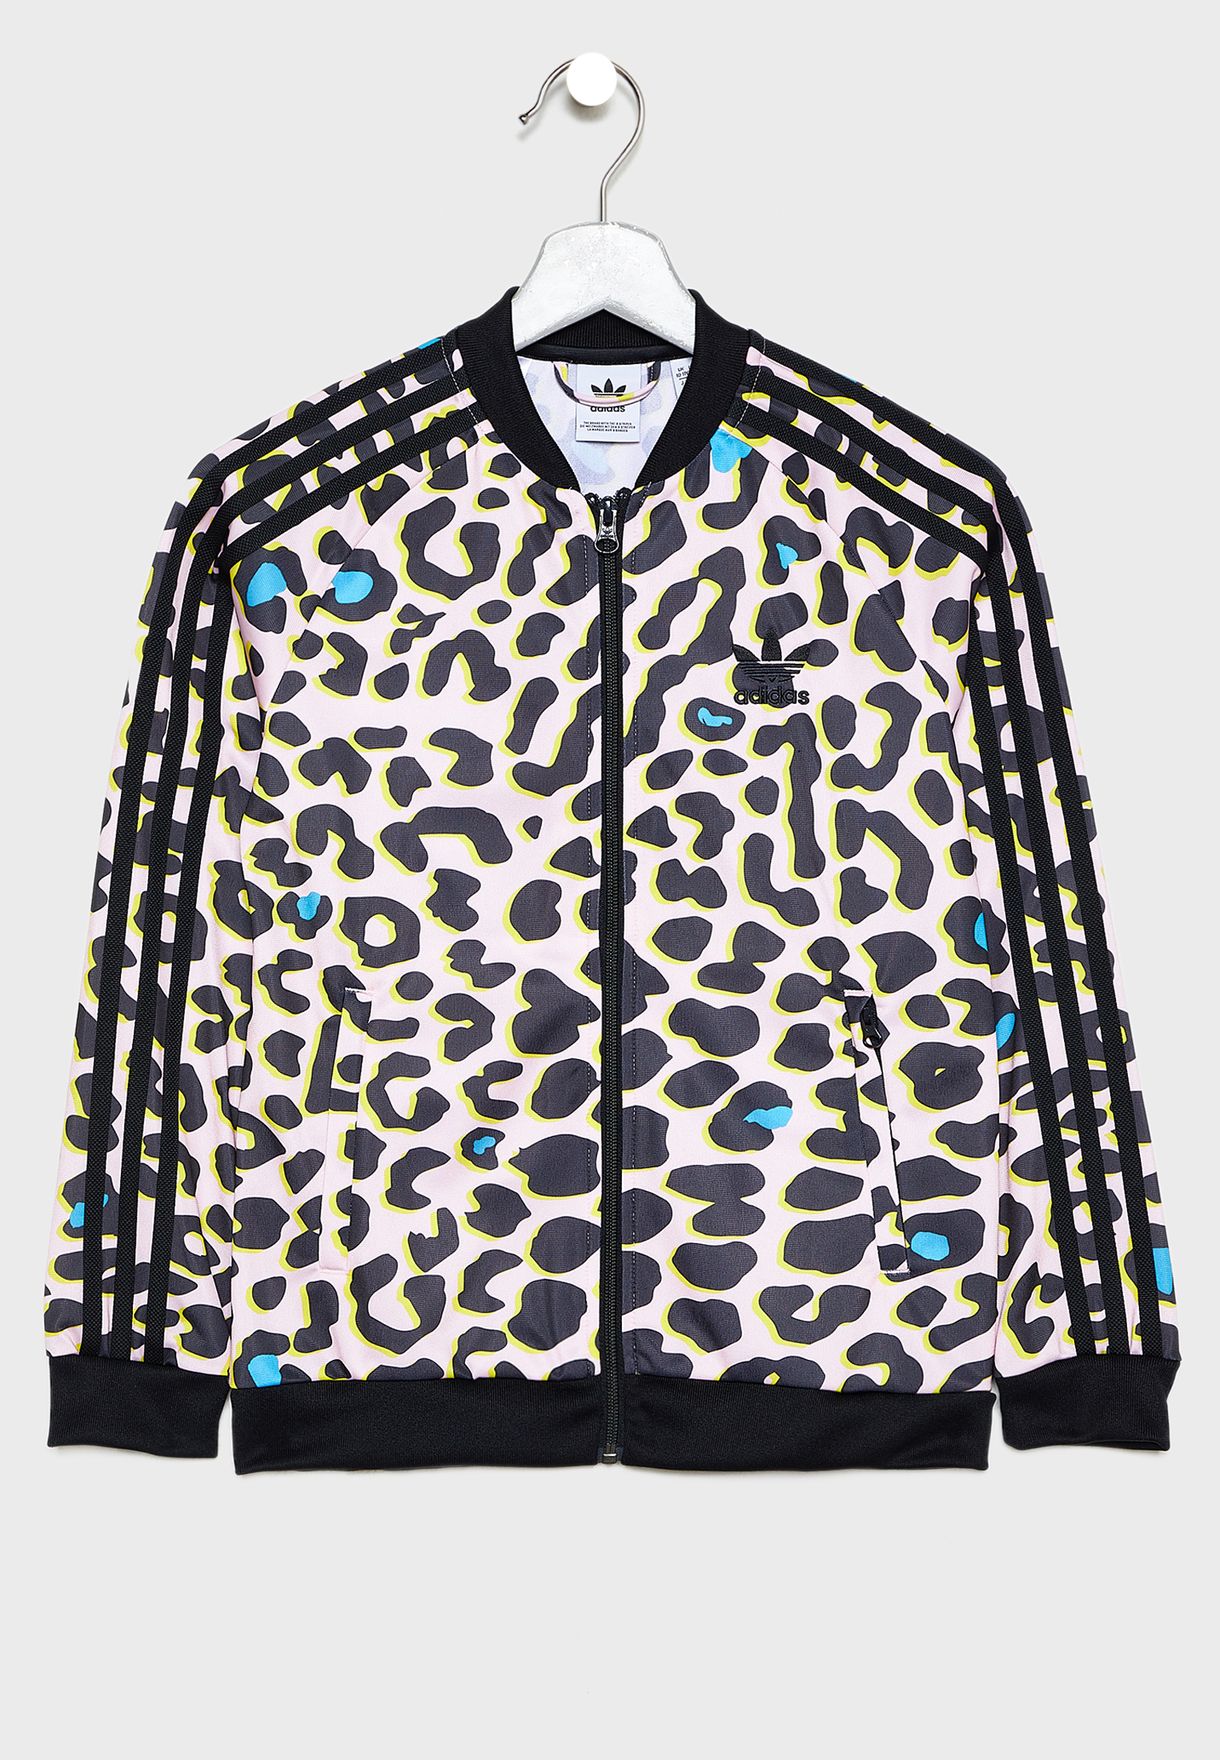 adidas leopard jacket